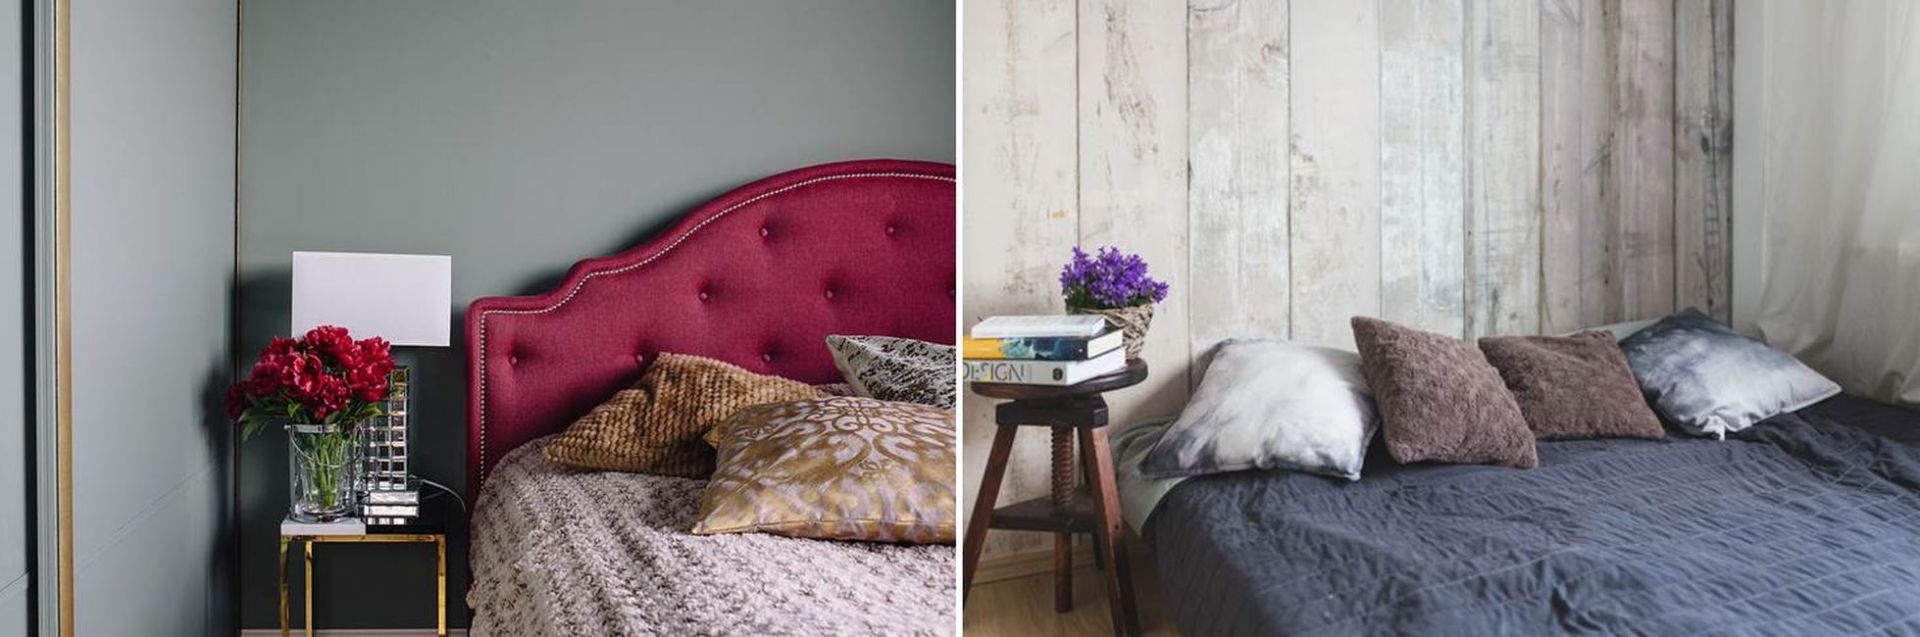 Metamorfoza sypialni przed i po. Fot. Interiors Design Blog 